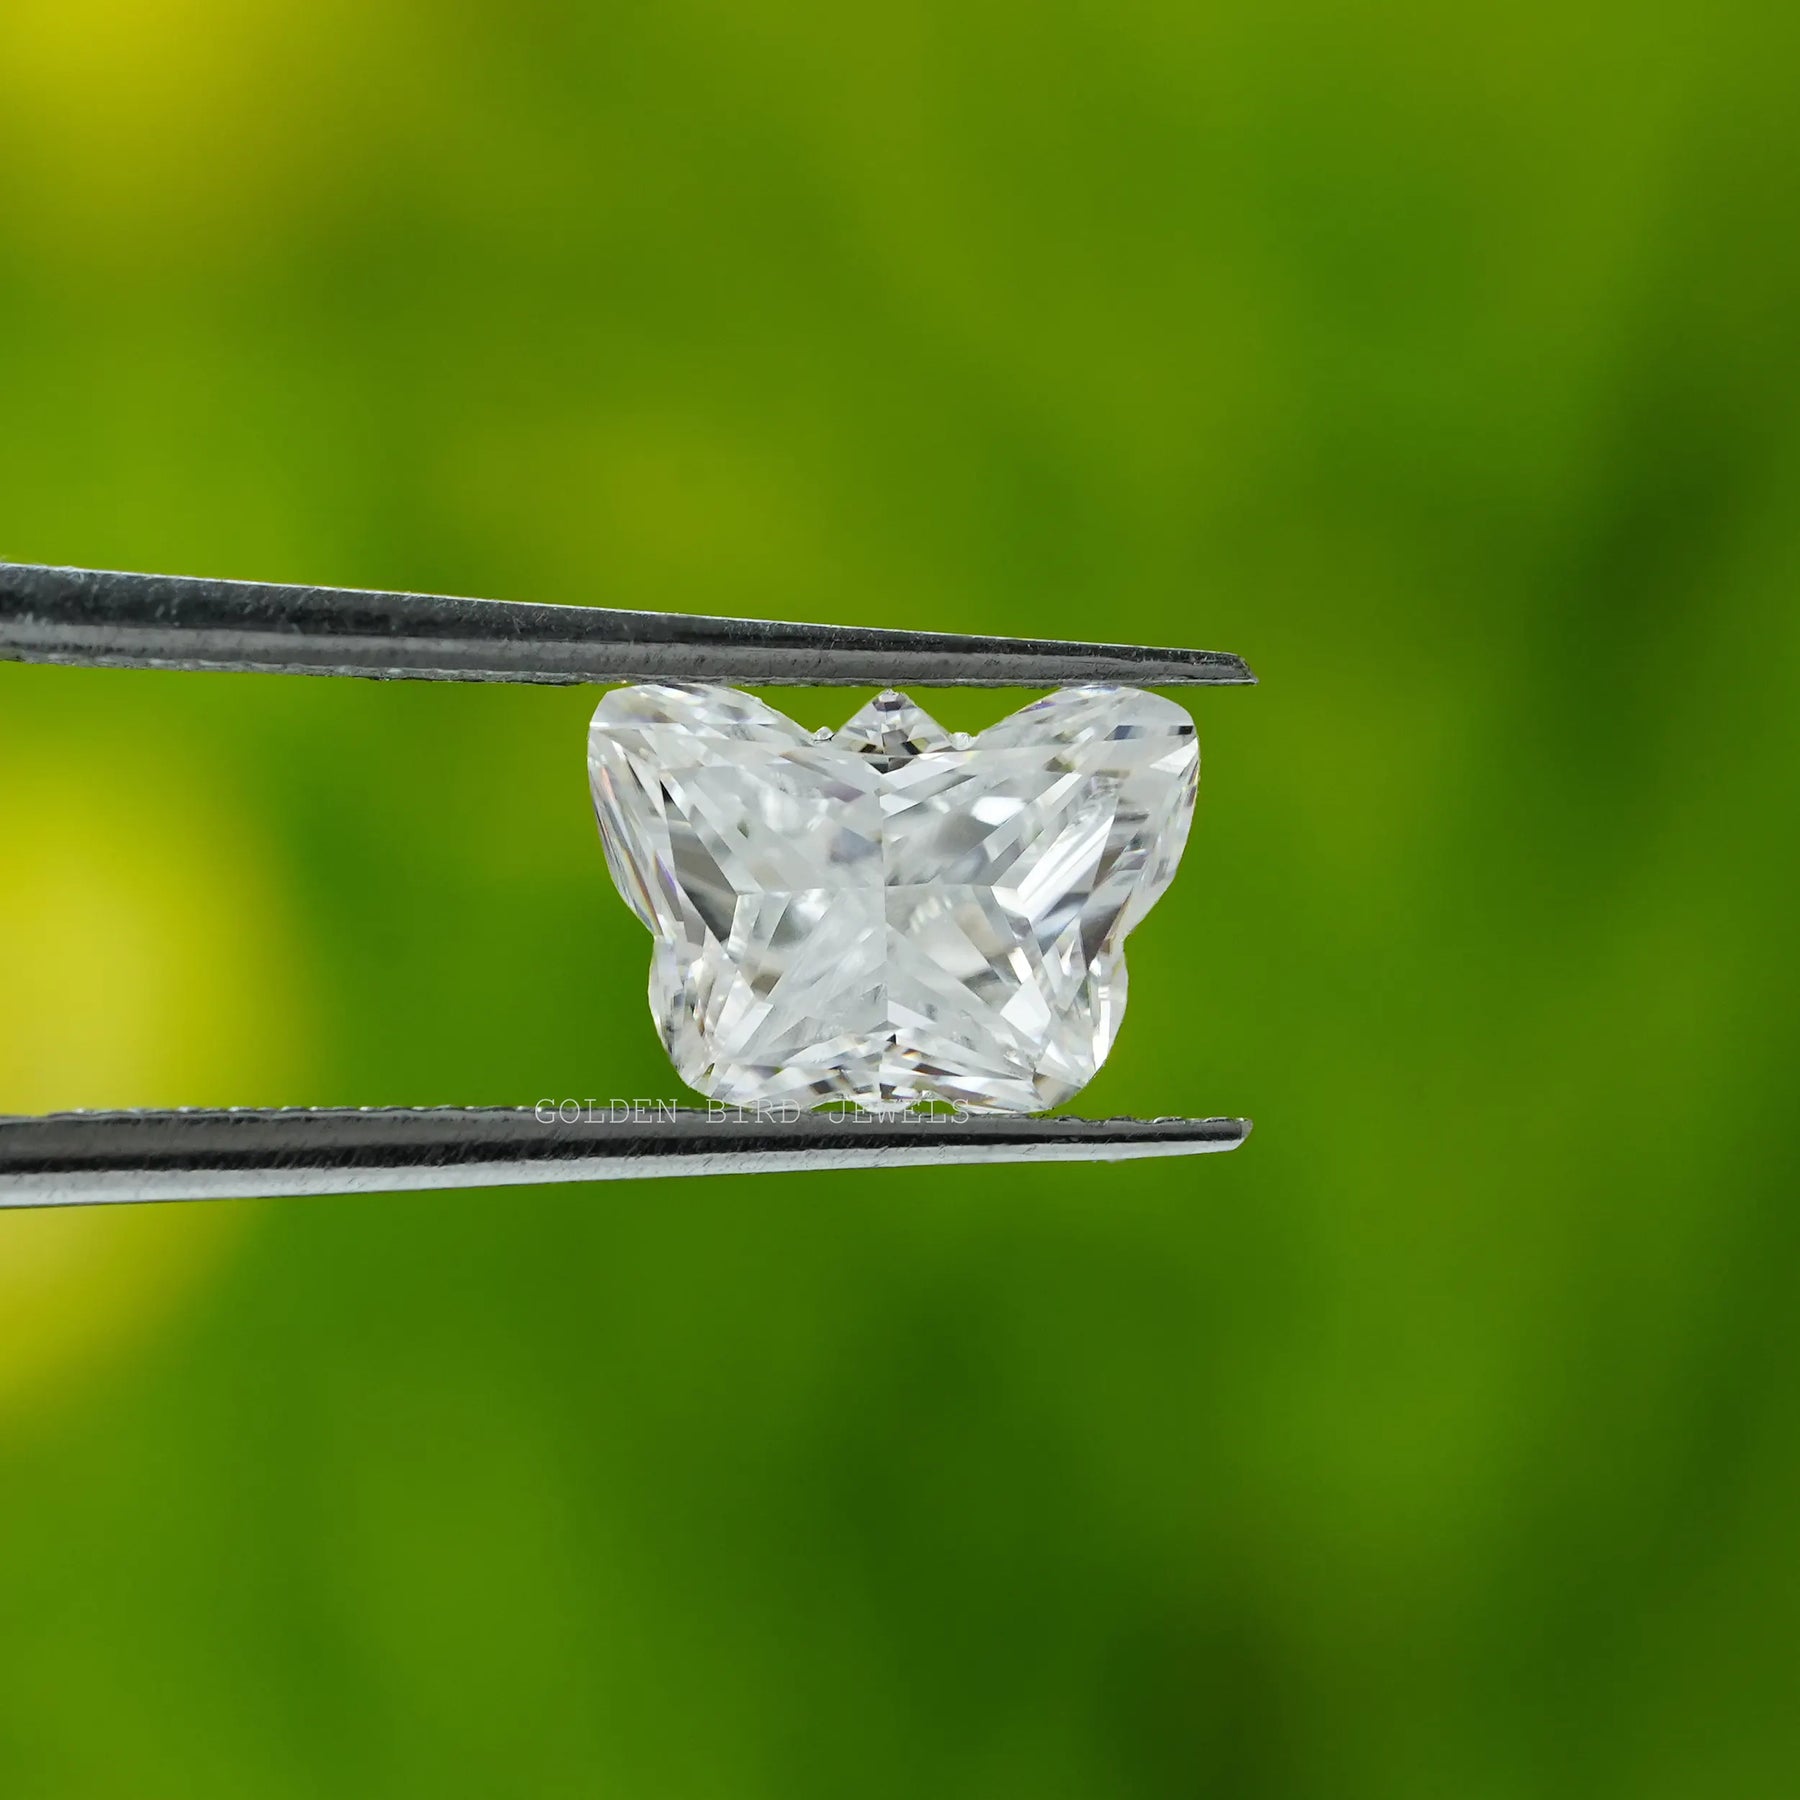 in tweezer front view of 2 carat colorless moissanite diamond